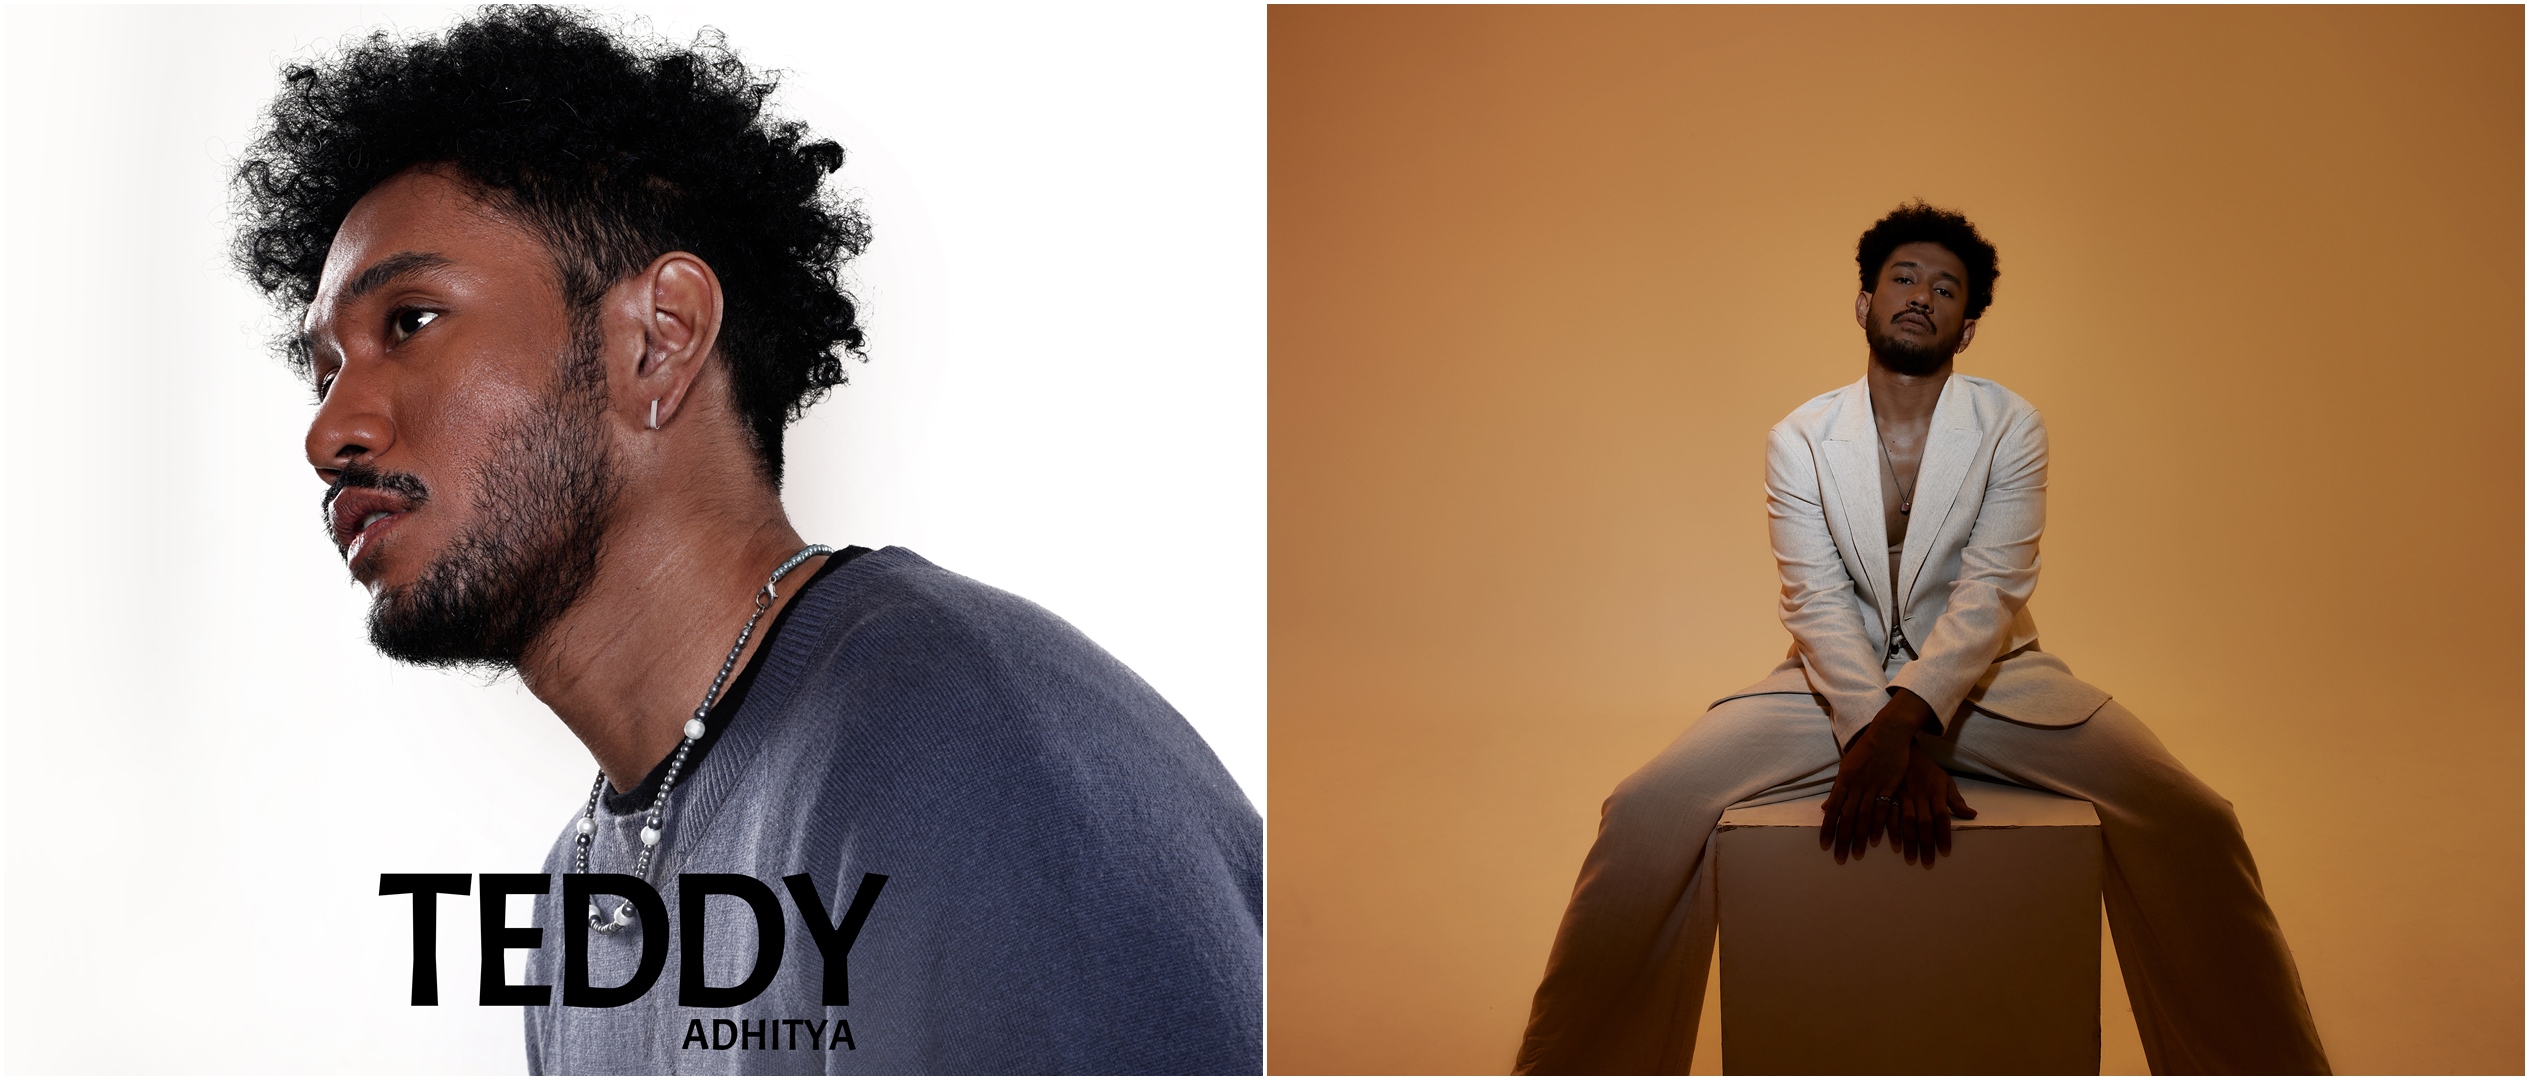 Persembahkan "Semua, Semua", Teddy Adhitya rilis album ketiga yang paling personal